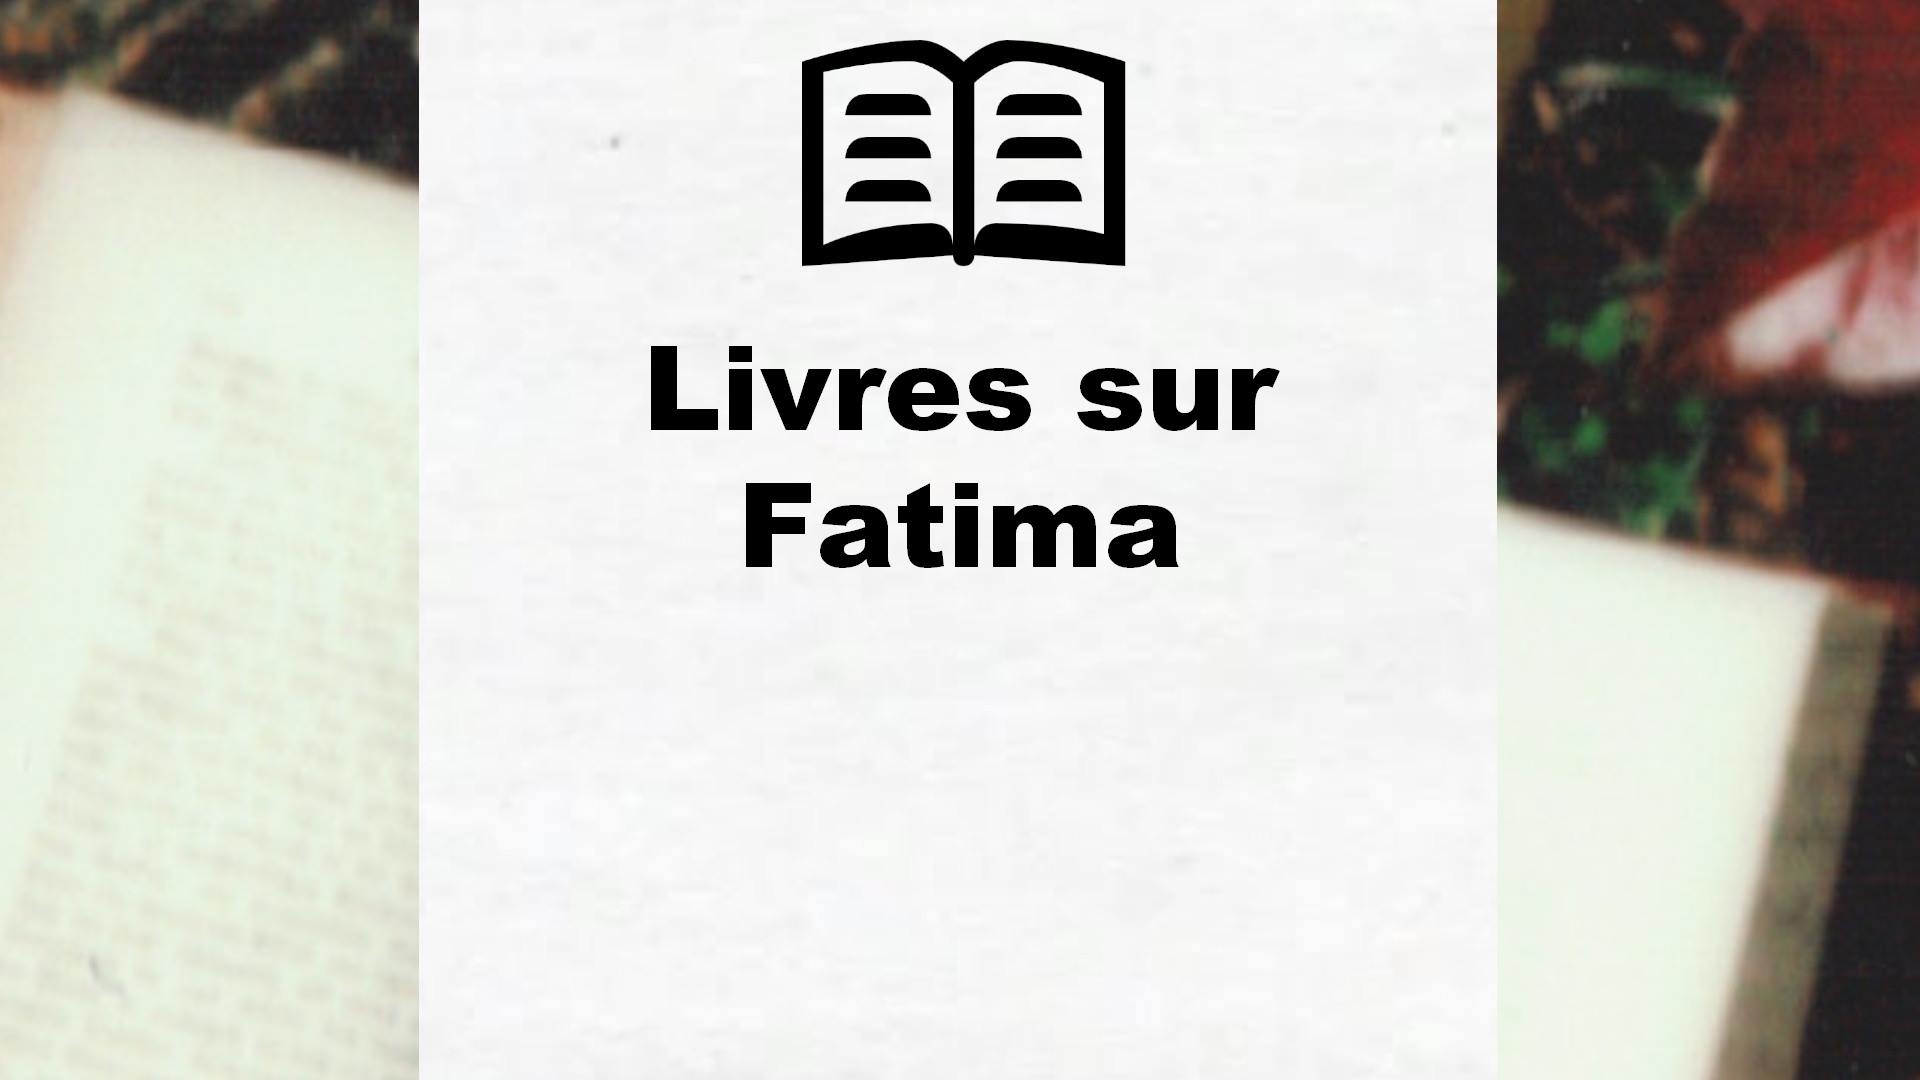 Livres sur Fatima